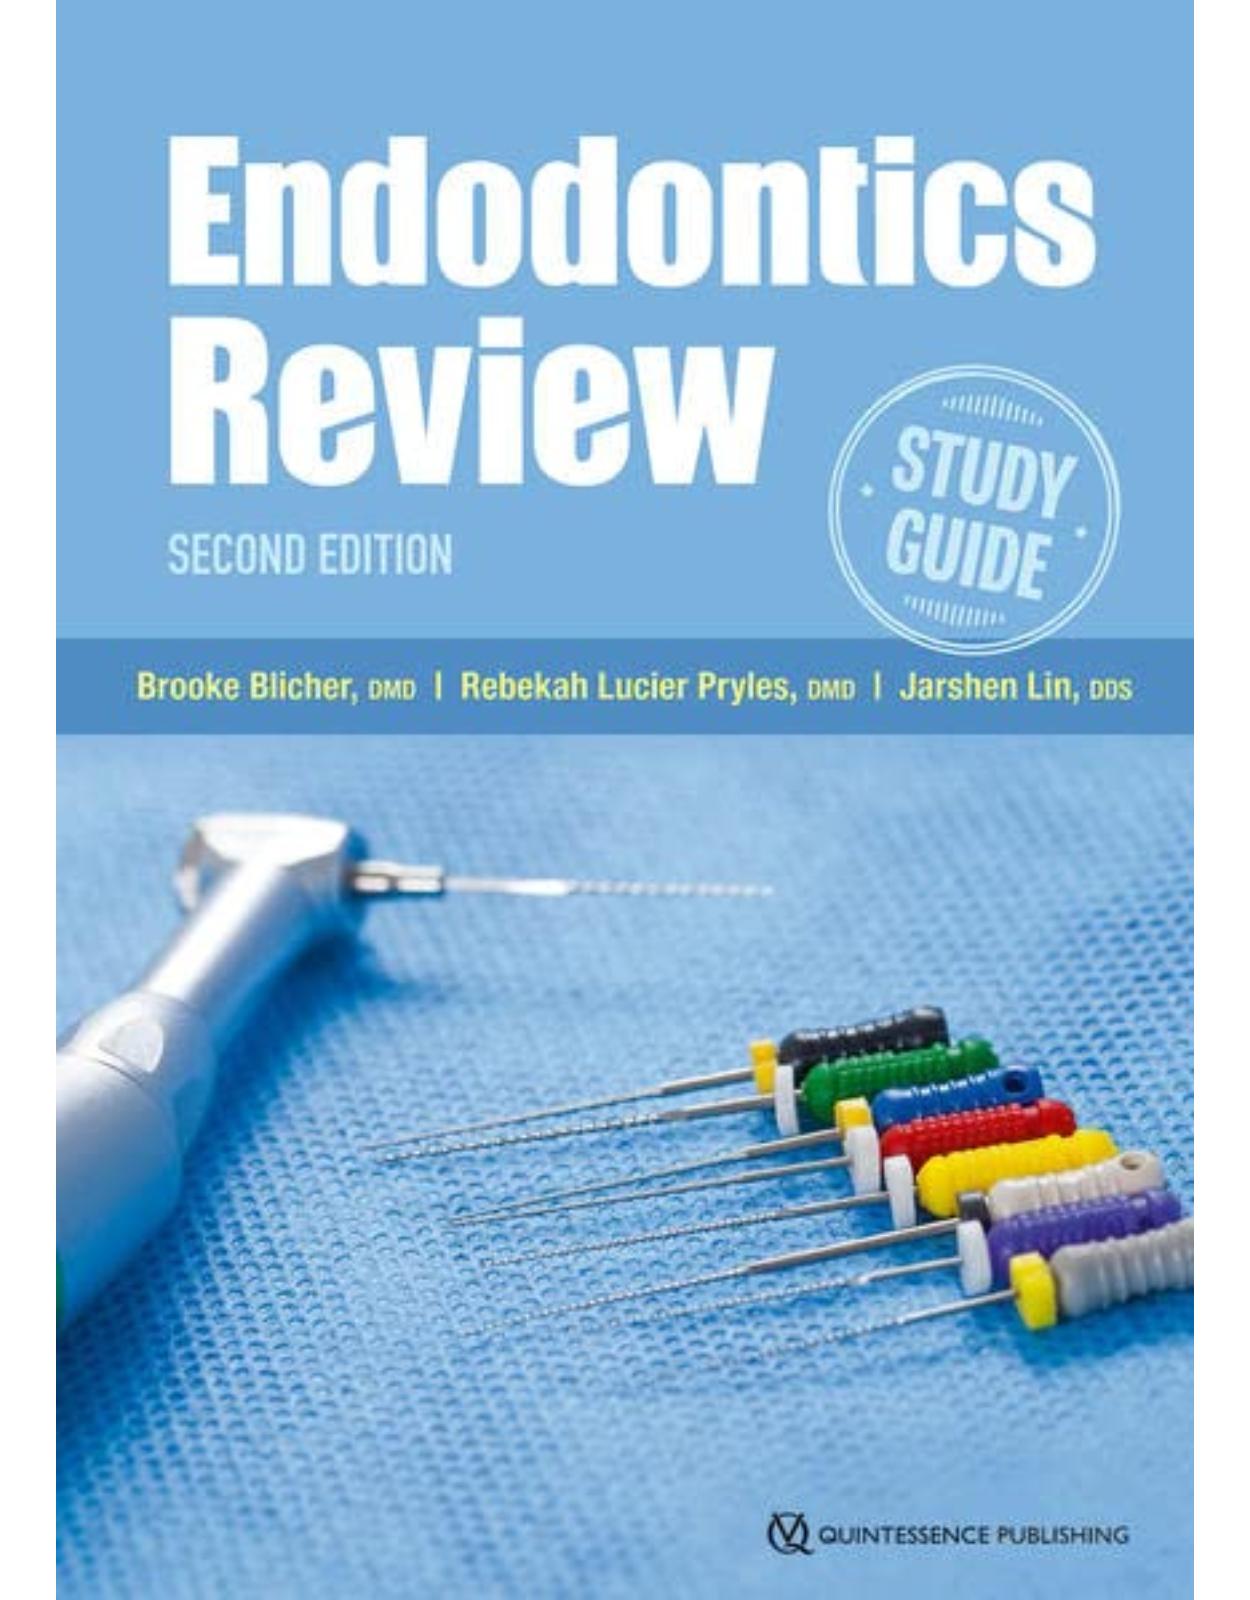 Endodontics Review